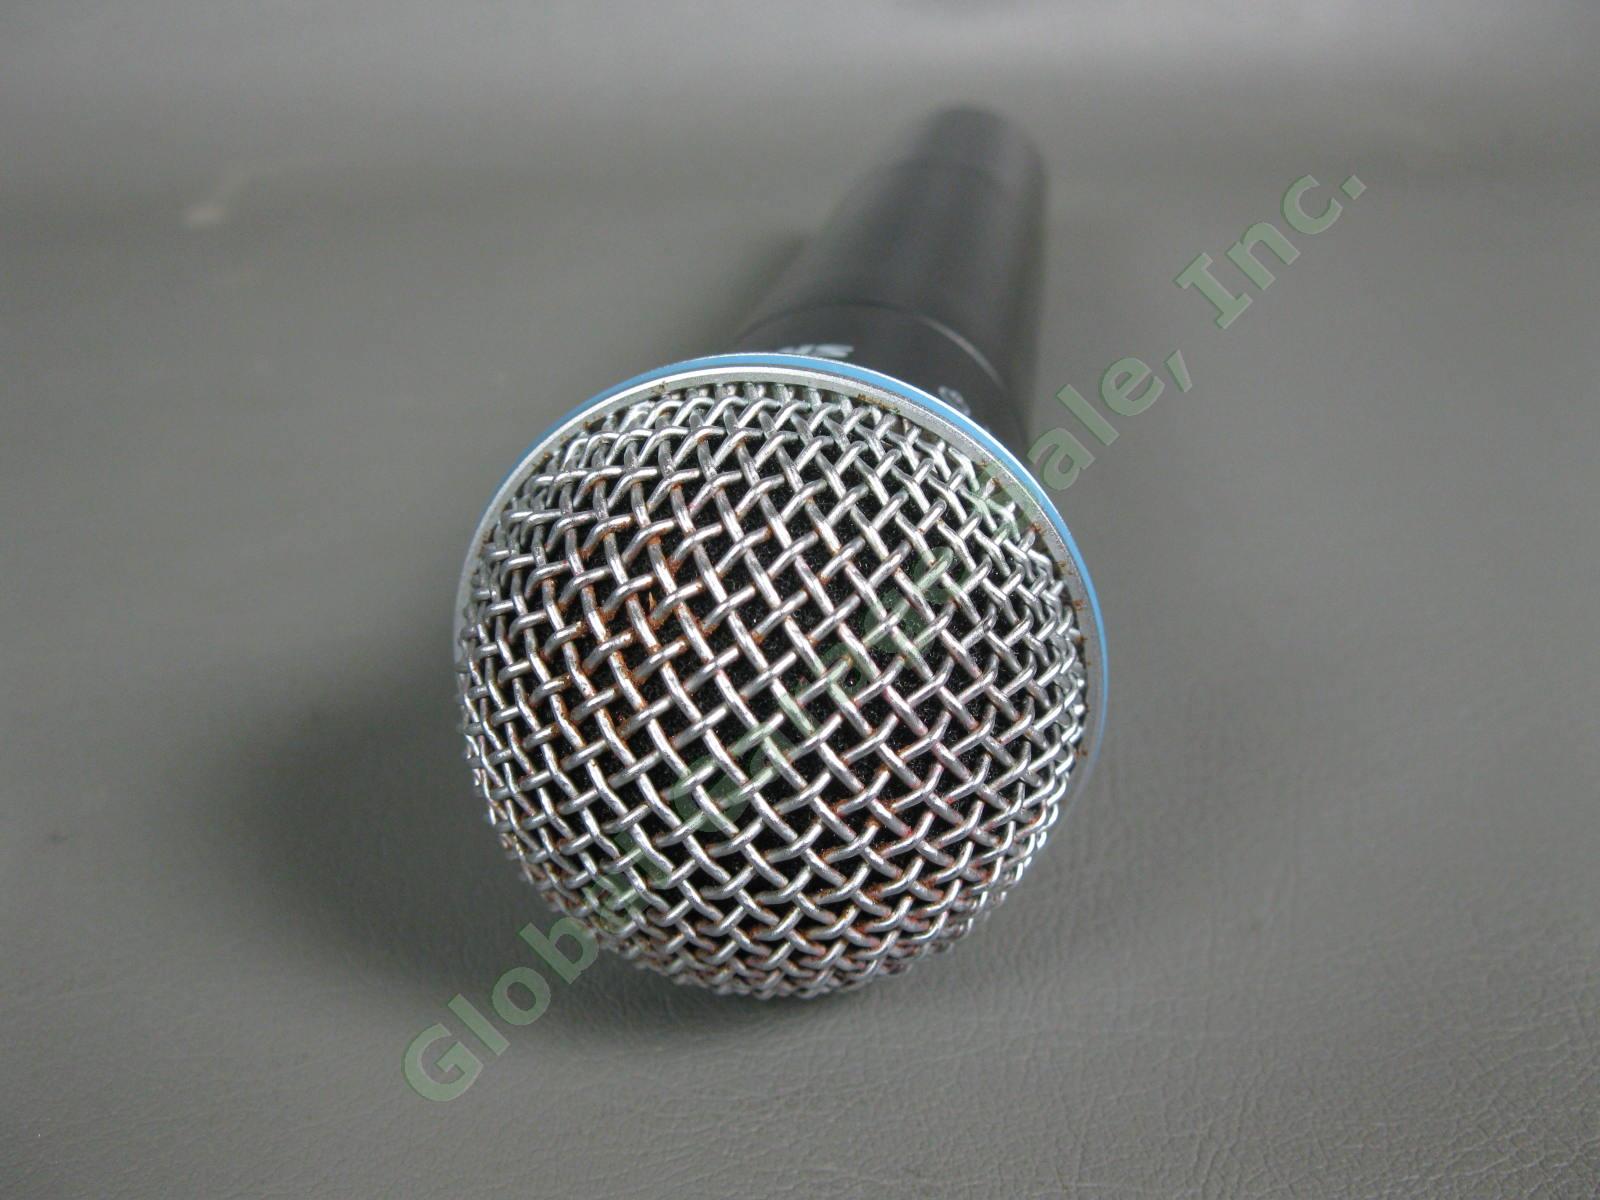 Shure Performance Gear PGX4 Wireless Receiver PGX2 Microphone Beta 58A Cap NR 7